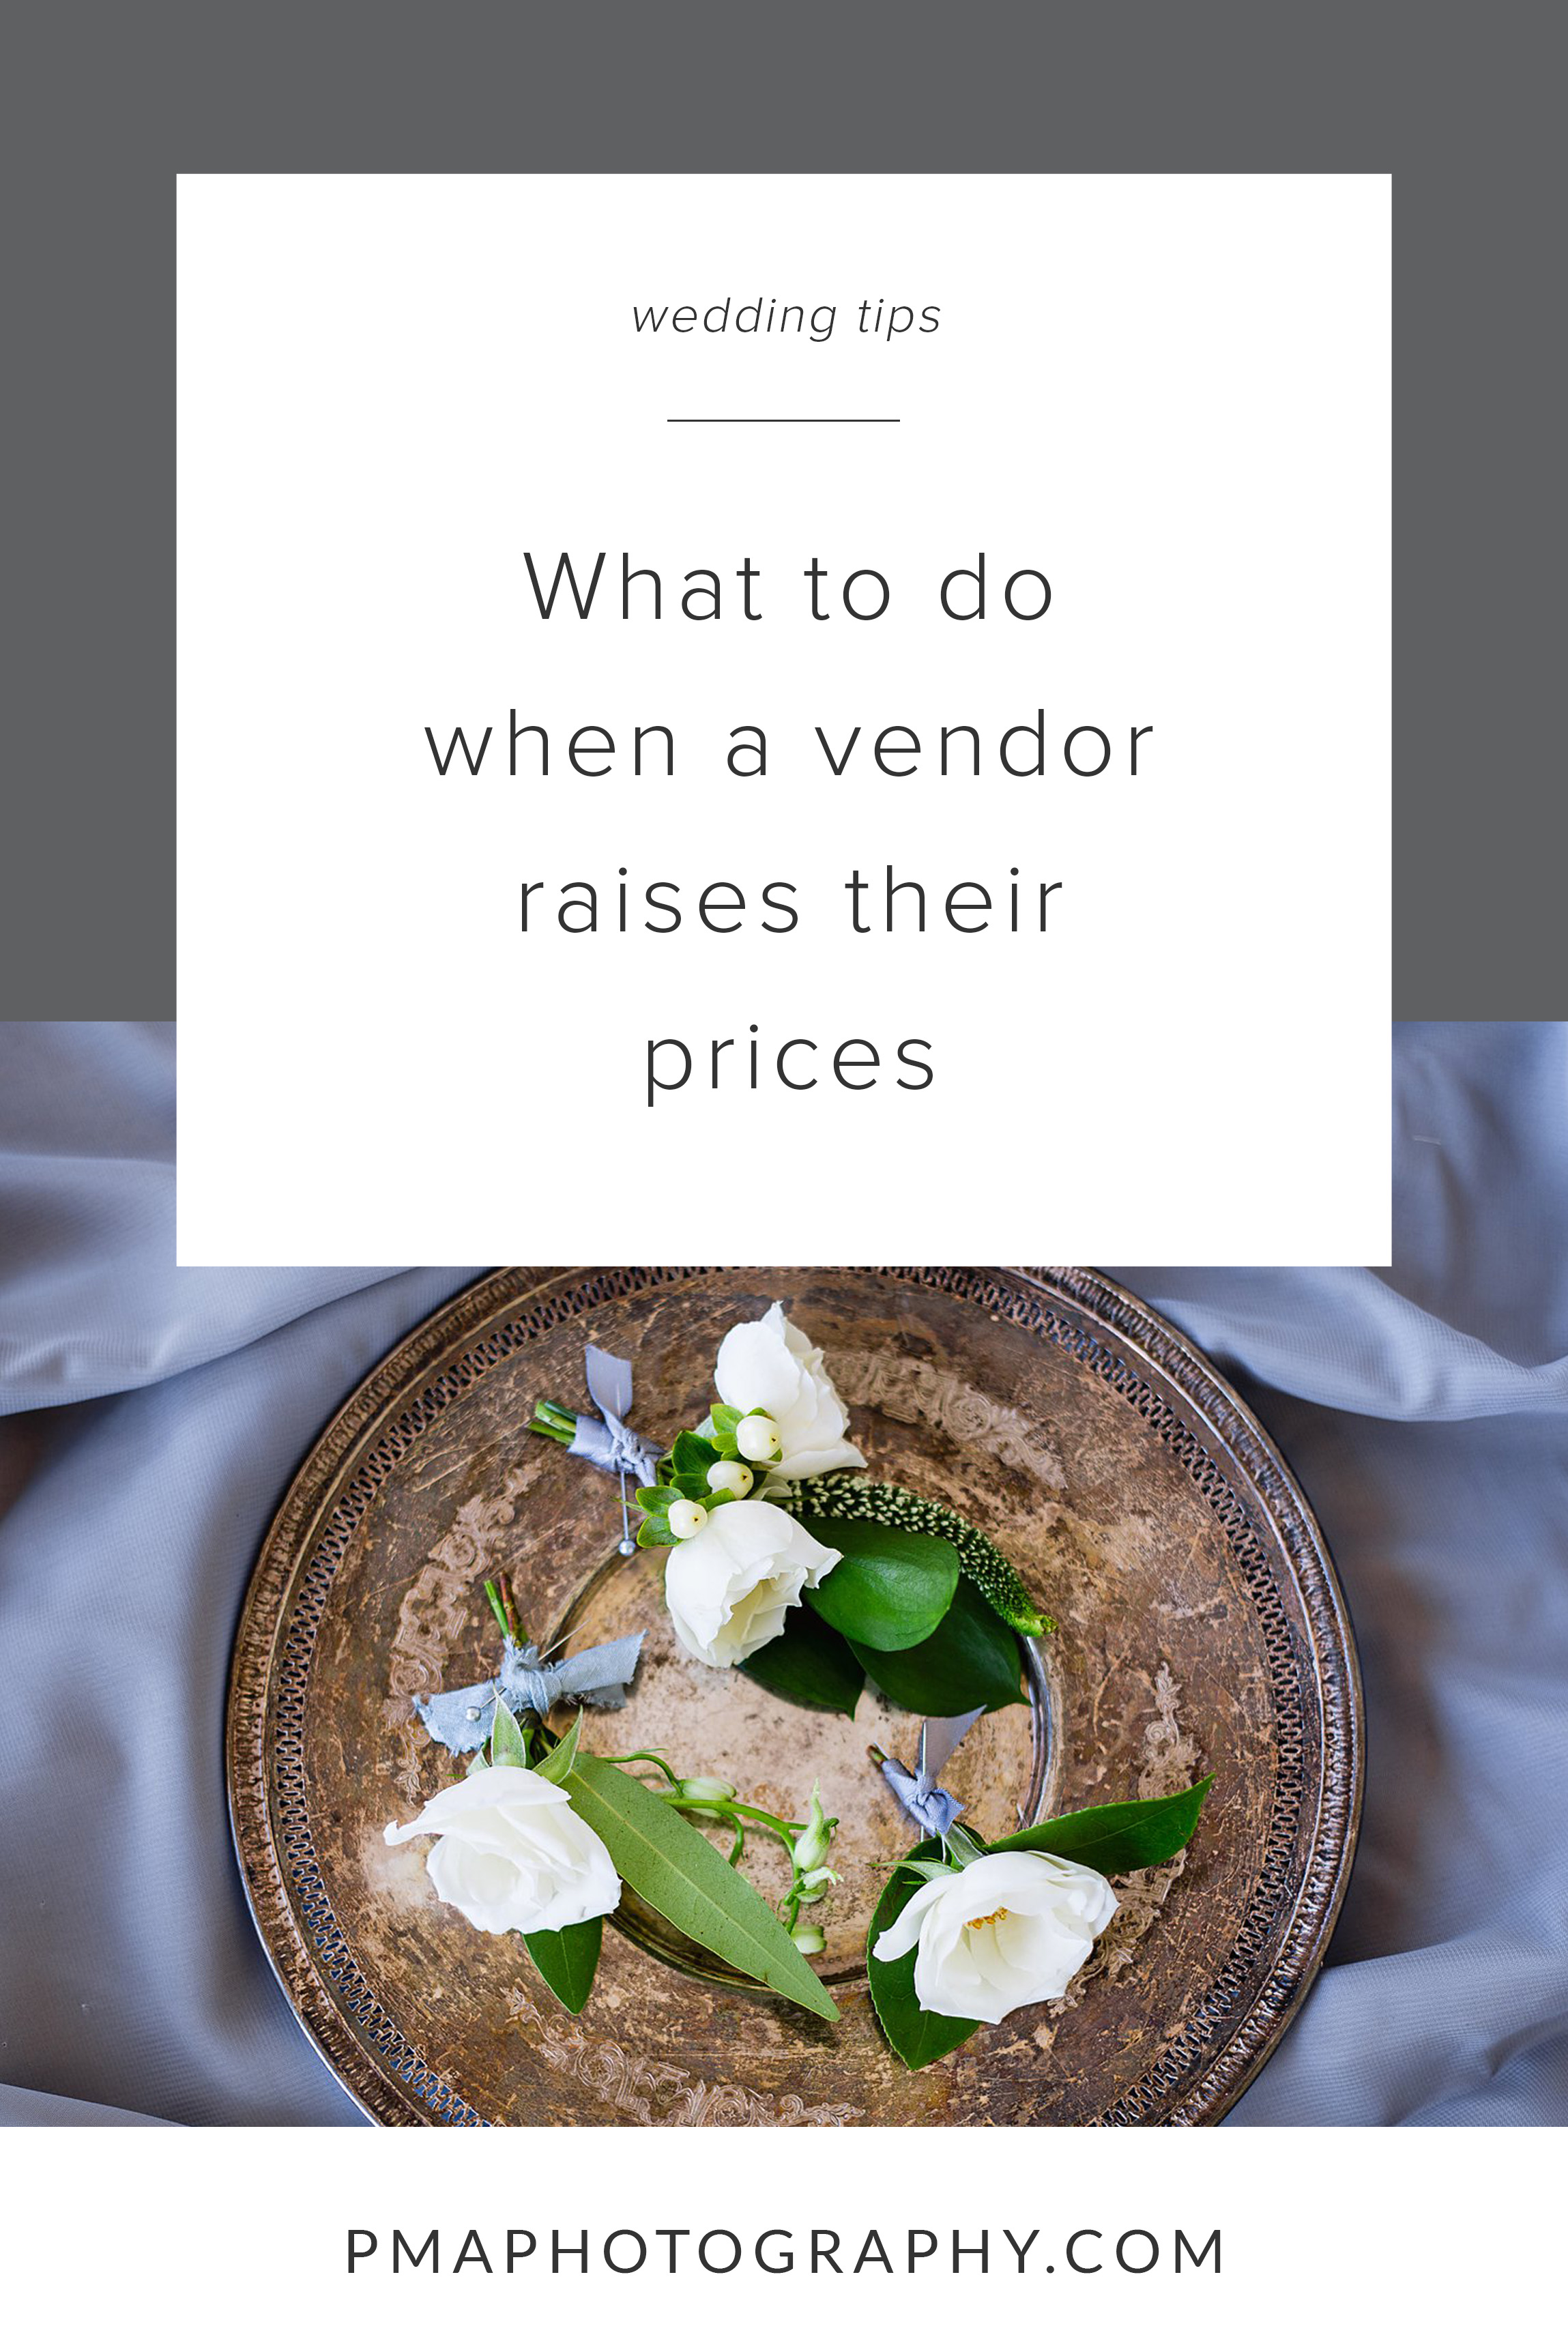 What to do when a wedding vendor raises their prices.